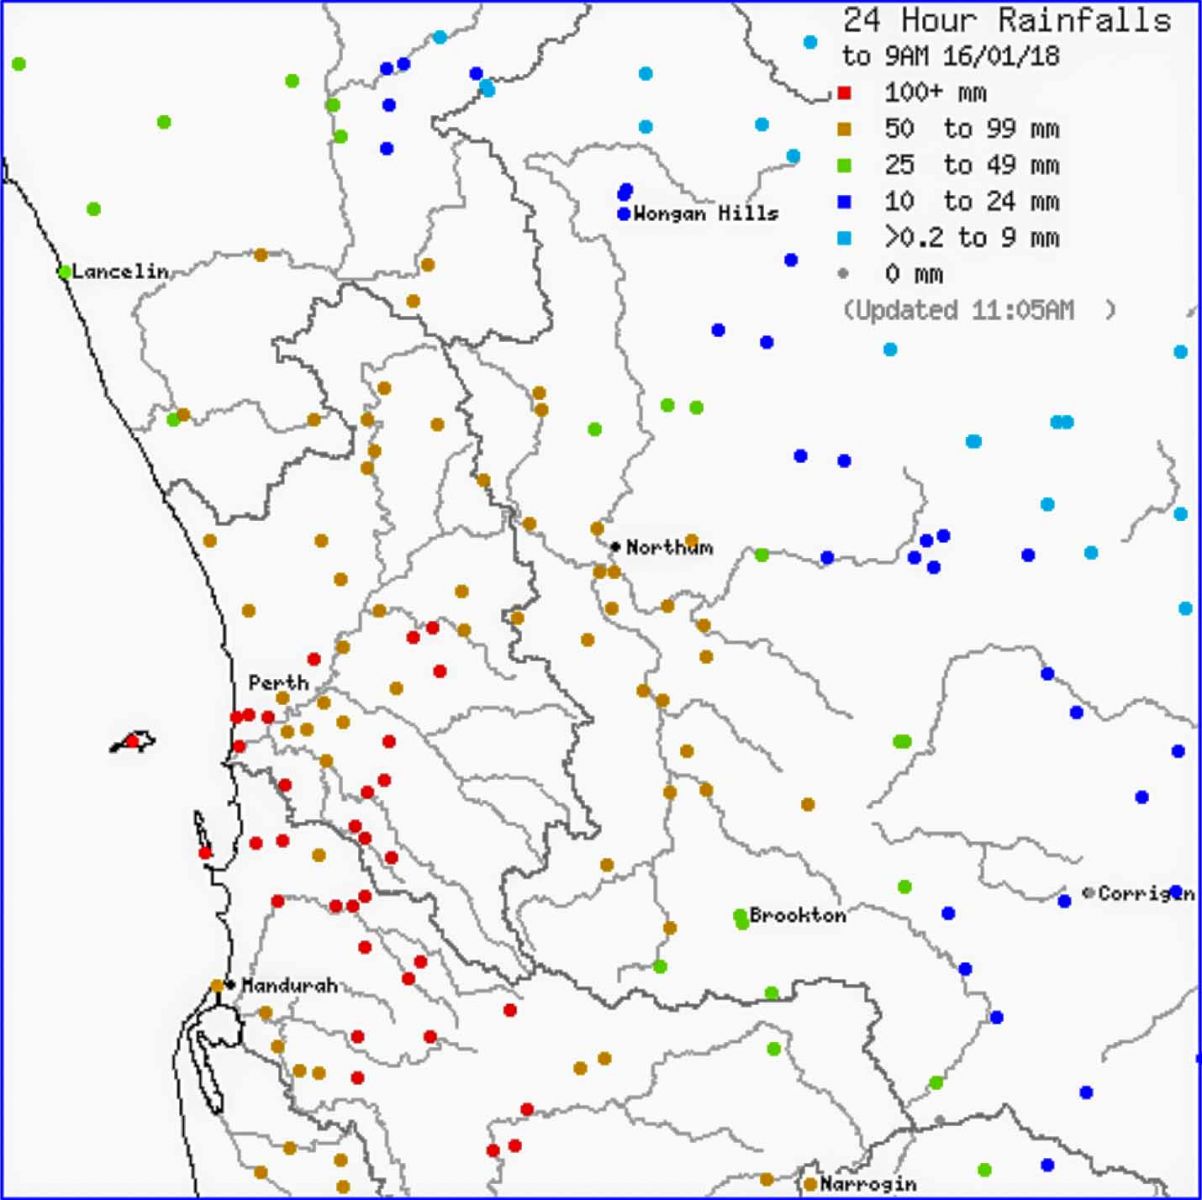 24 hour rainfalls - Perth, WA January 15 - 16, 2018